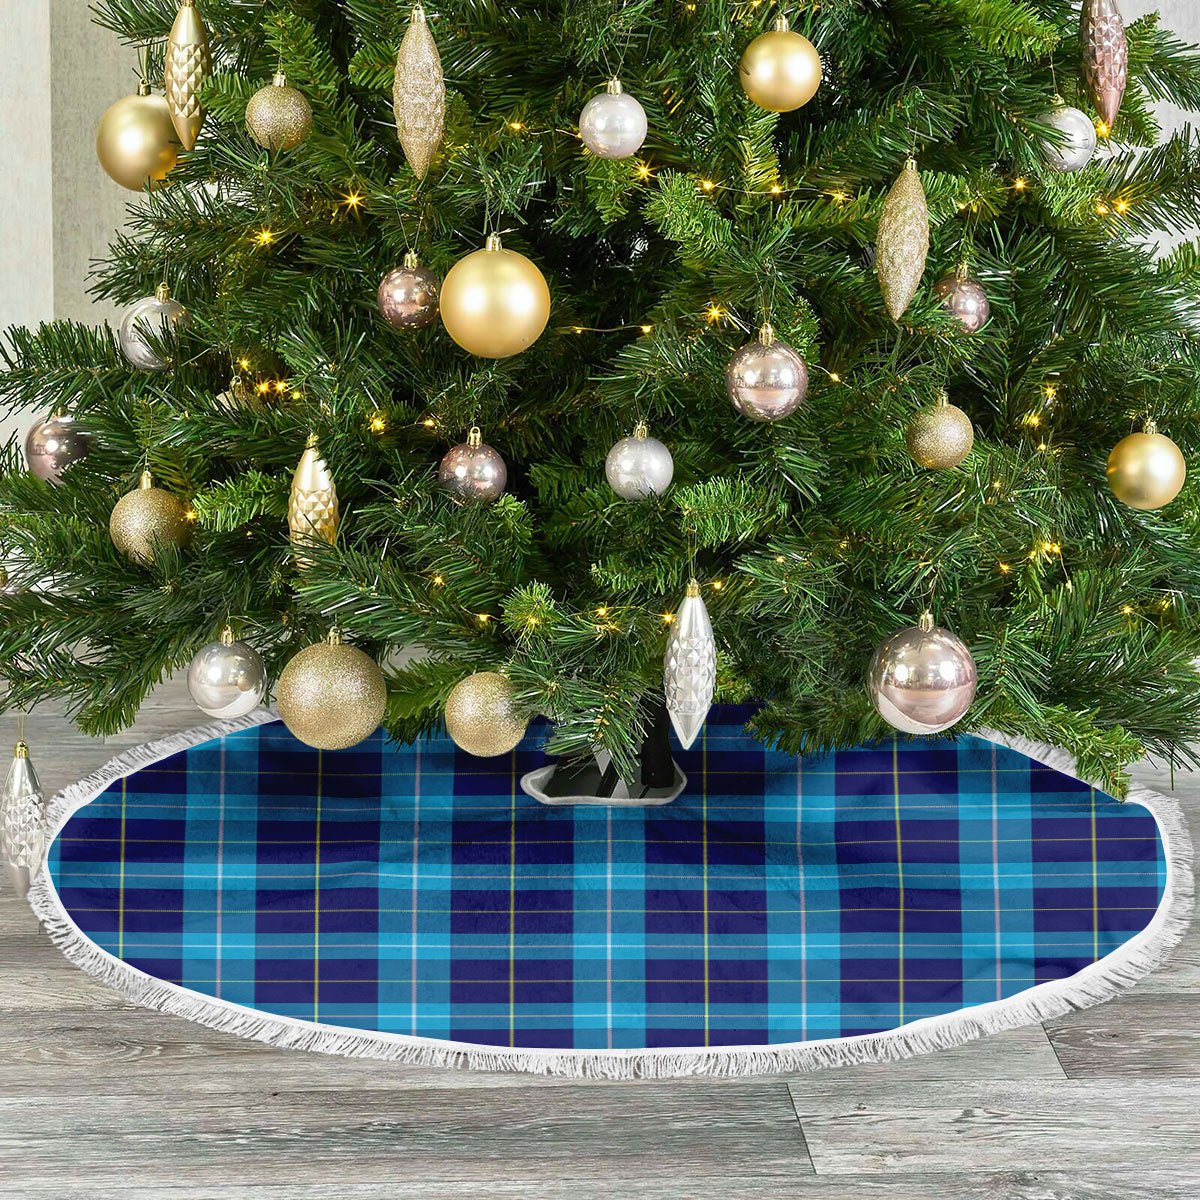 McKerrell Tartan Christmas Tree Skirt